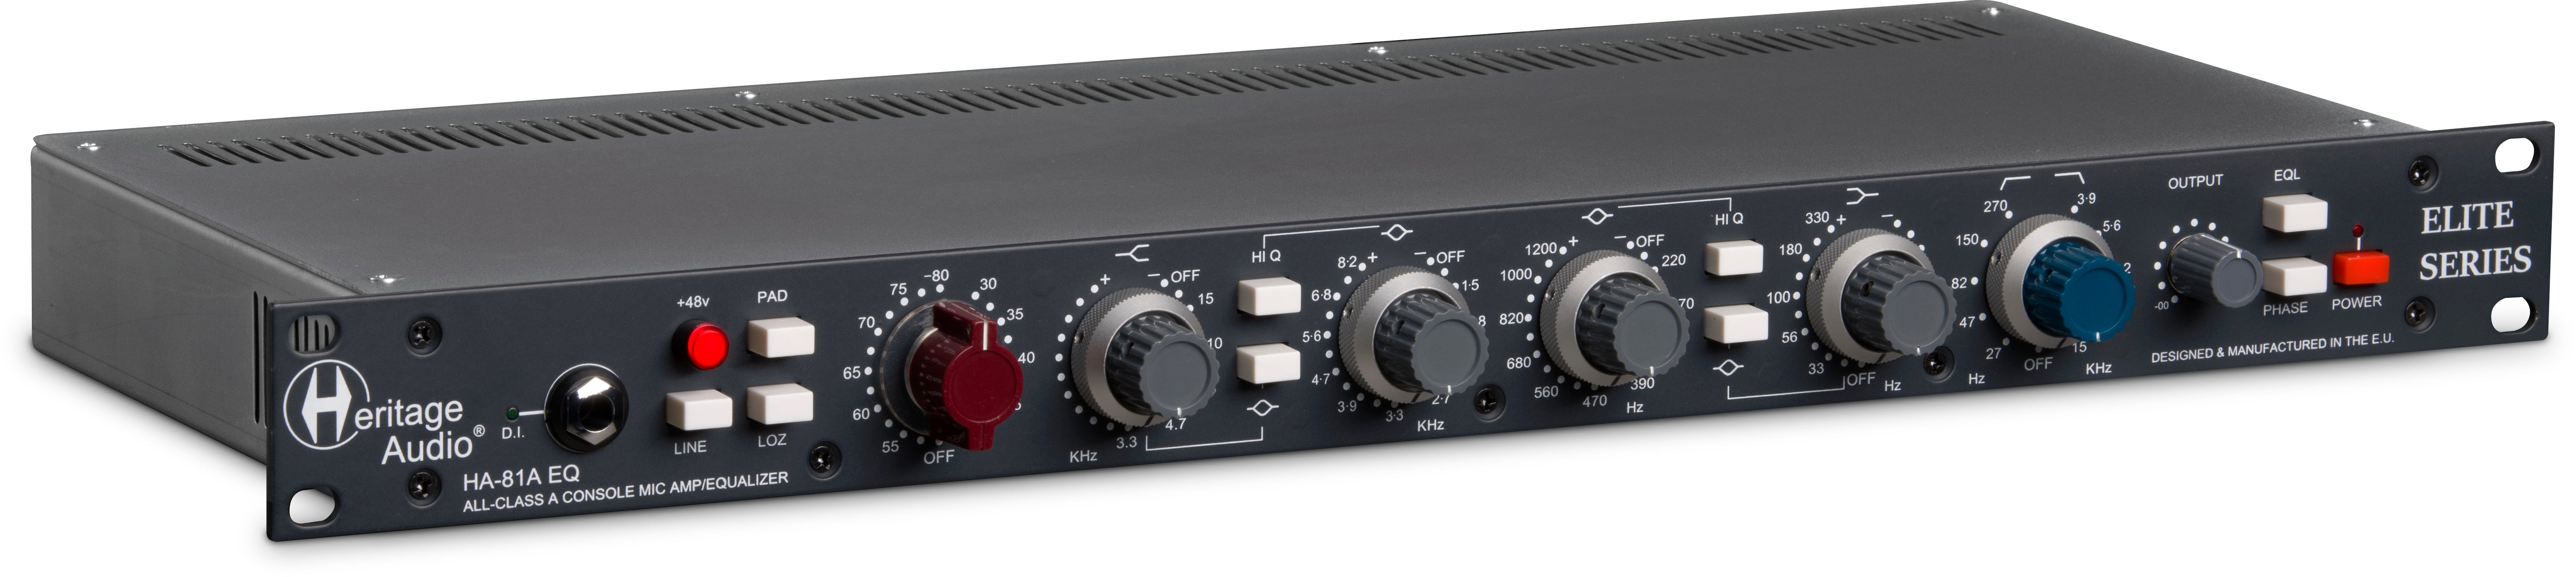 New Heritage Audio HA-81A | Microphone Preamp & EQ